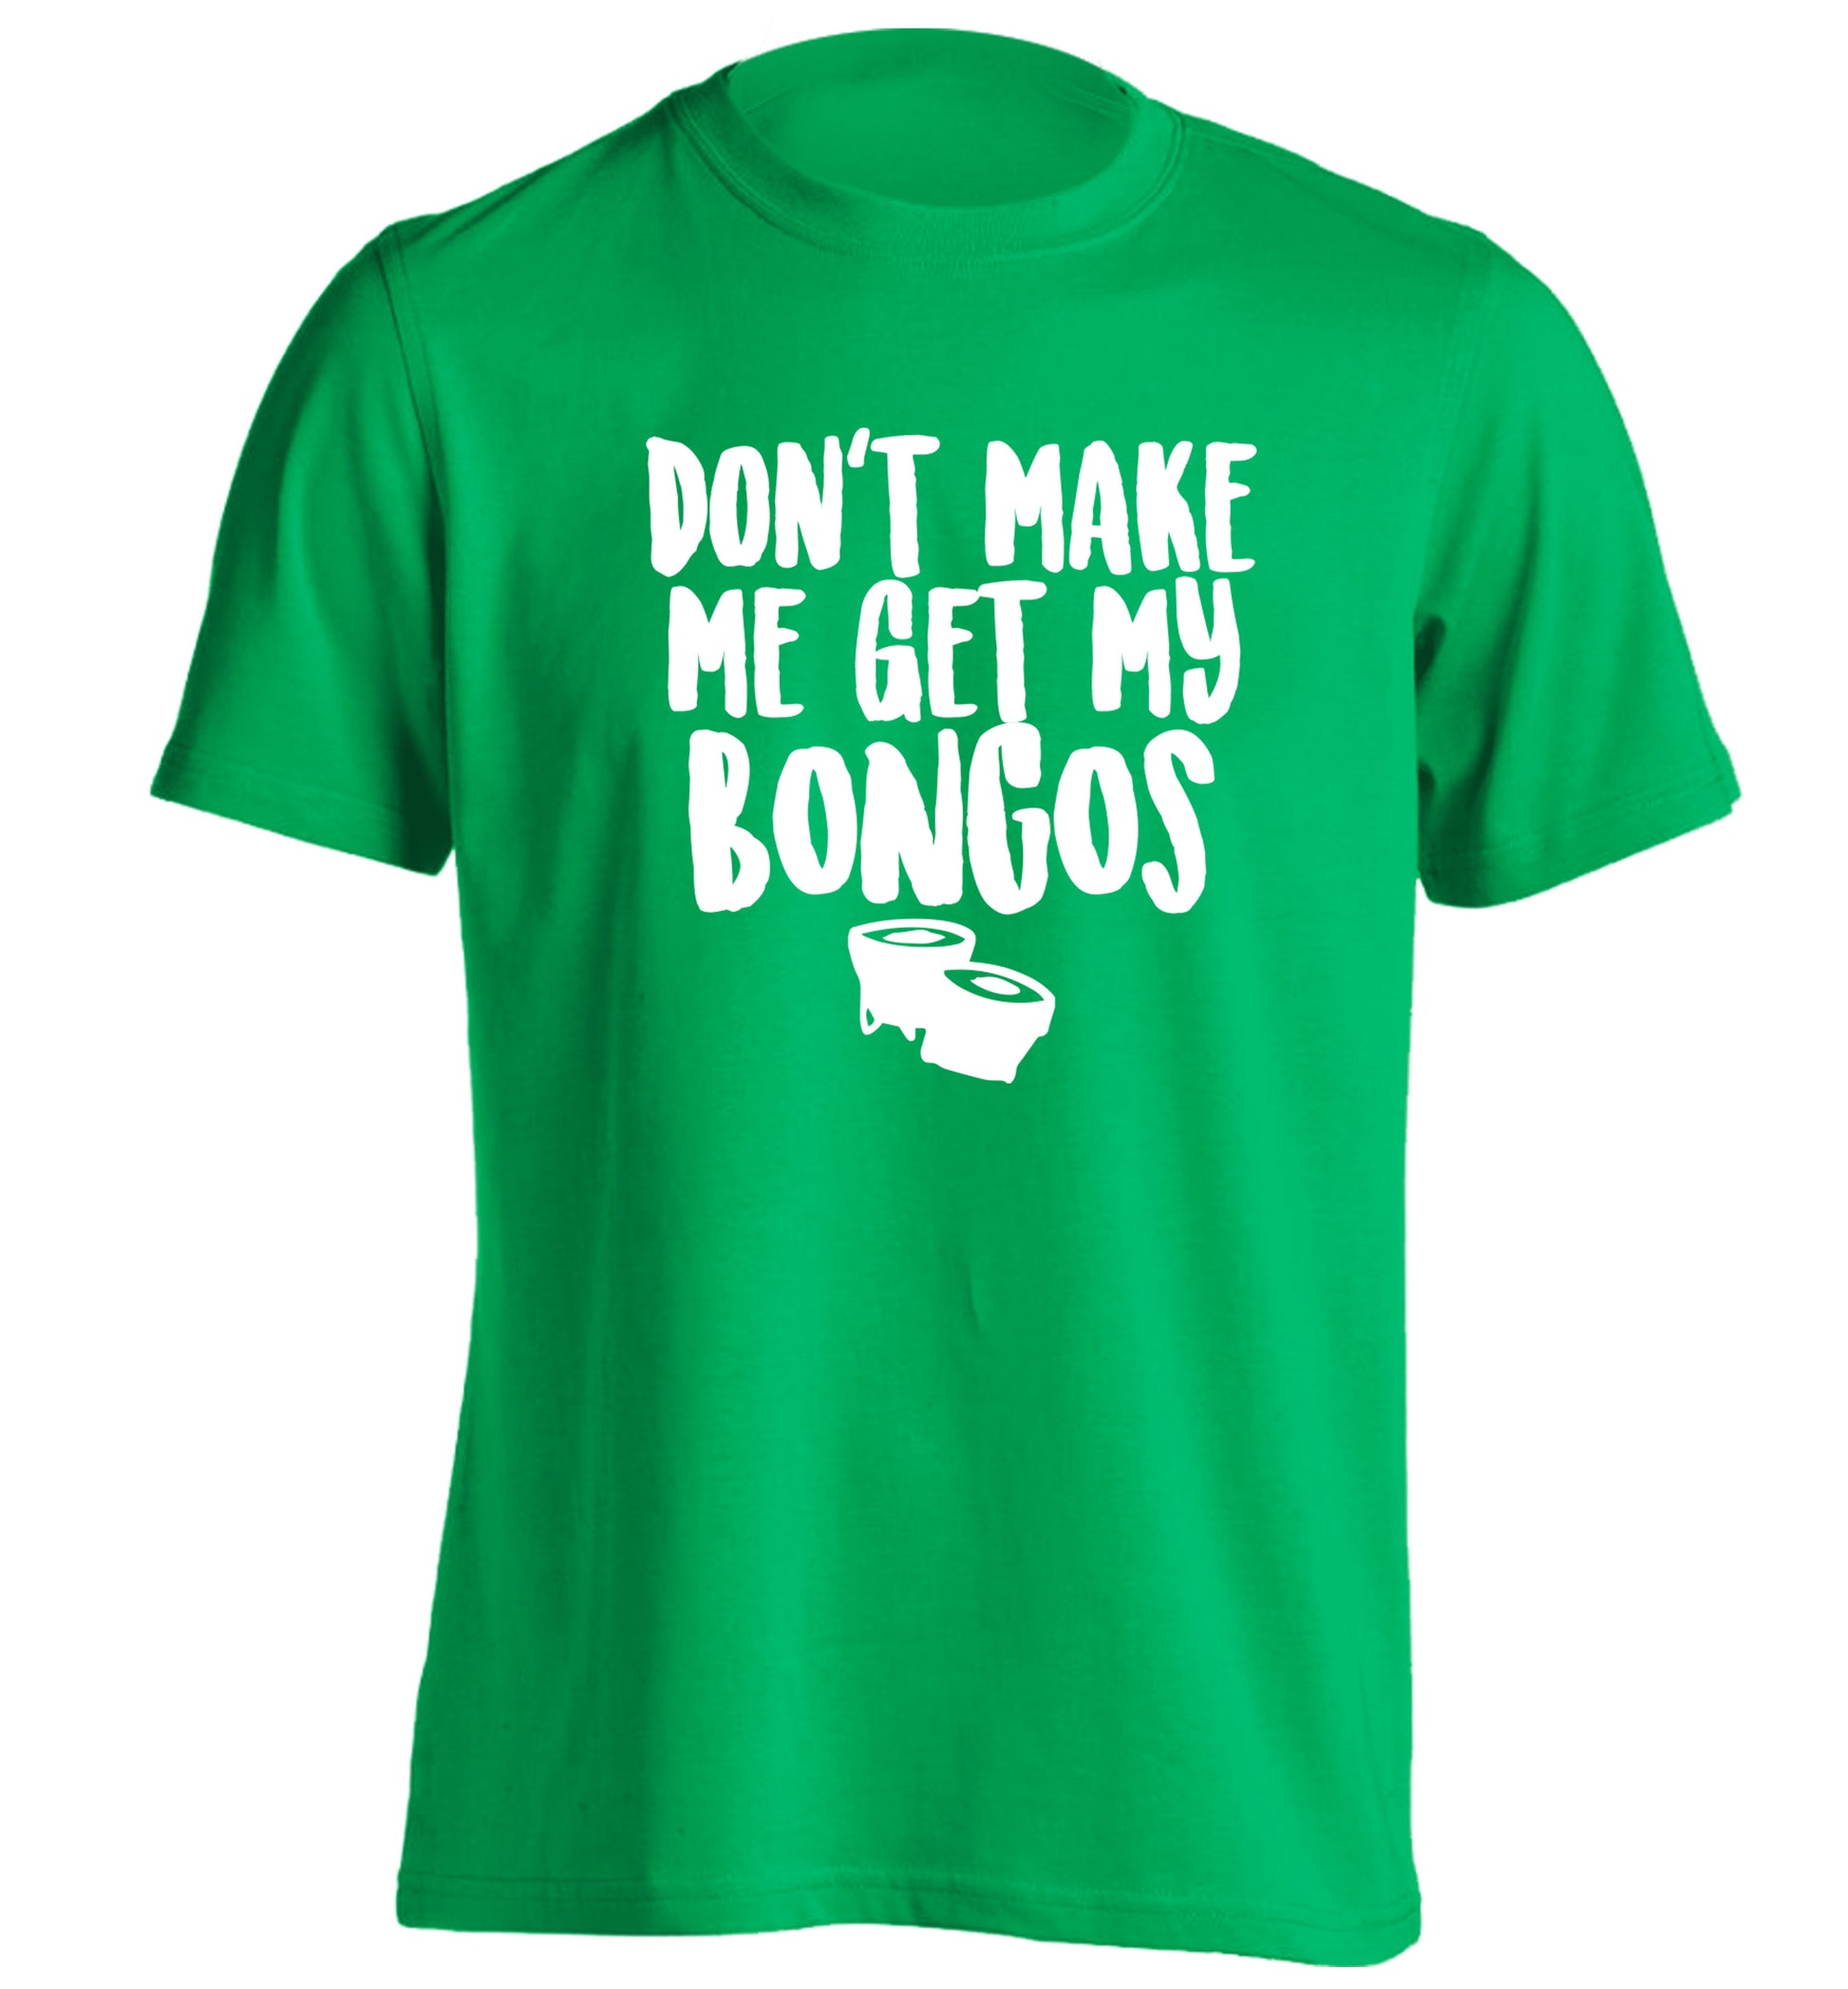 Don't make me get my bongos adults unisex green Tshirt 2XL